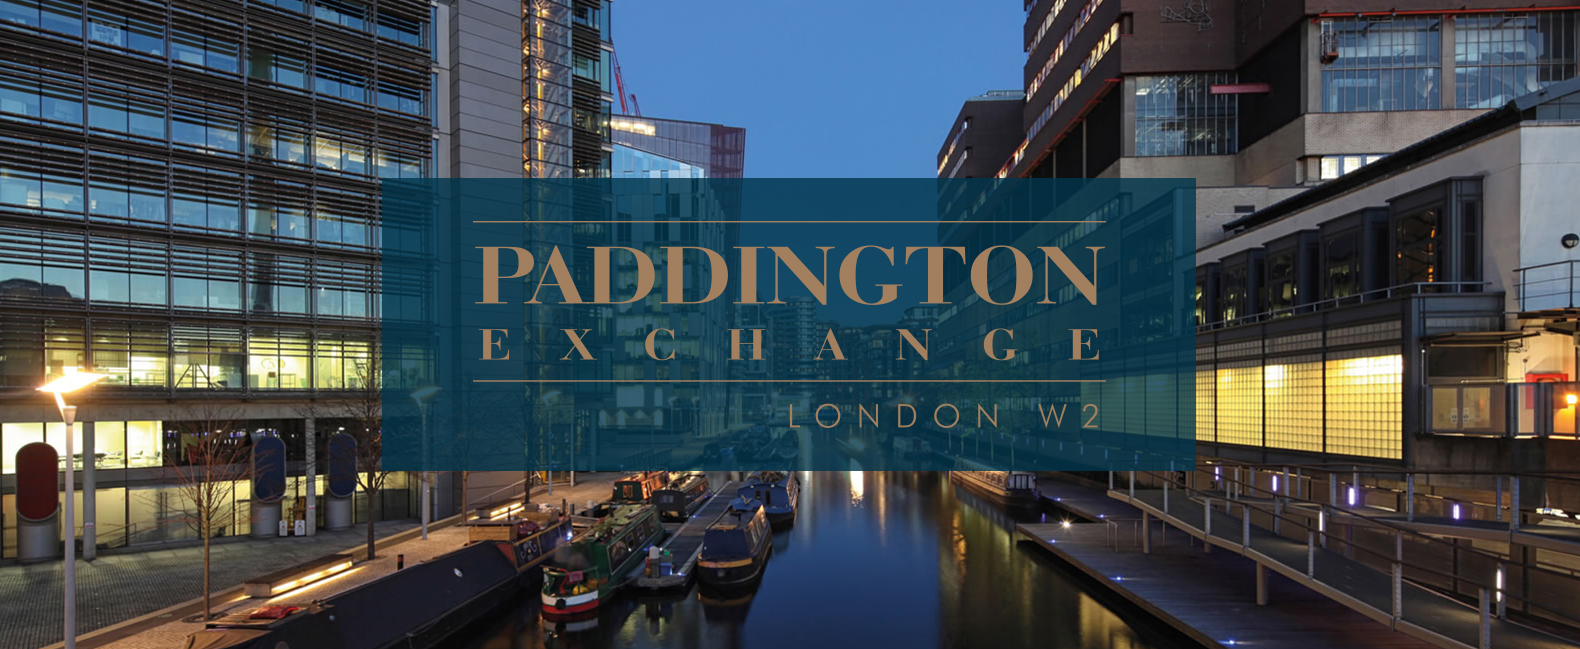 Padington Exchange London W2